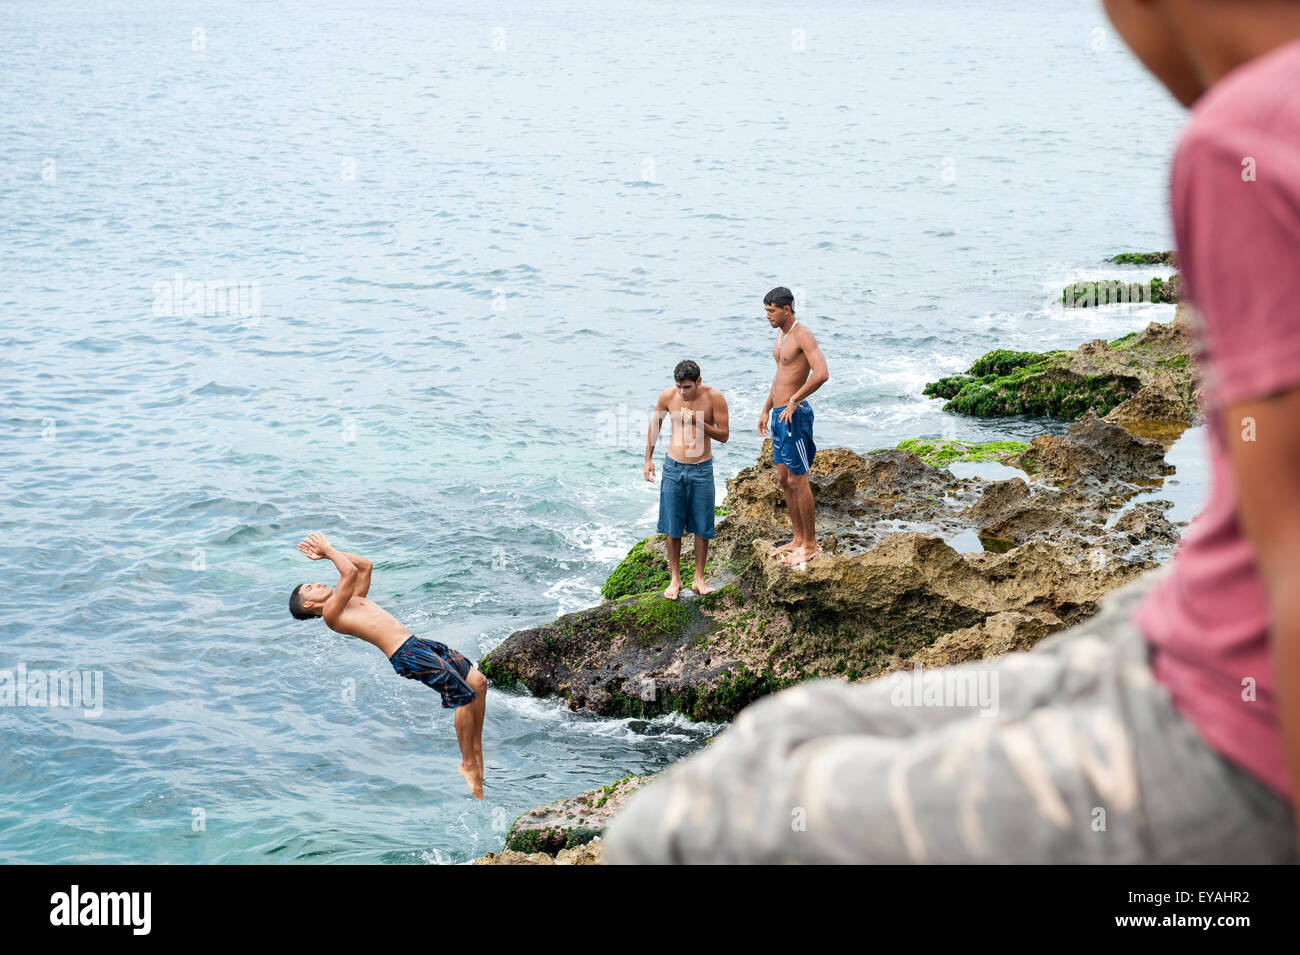 HAVANA, CUBA - MAY 23, 2011: Young Cubans take turns jumping into the sea at a popular swimming hole called Cueva del Tiburon. Stock Photo